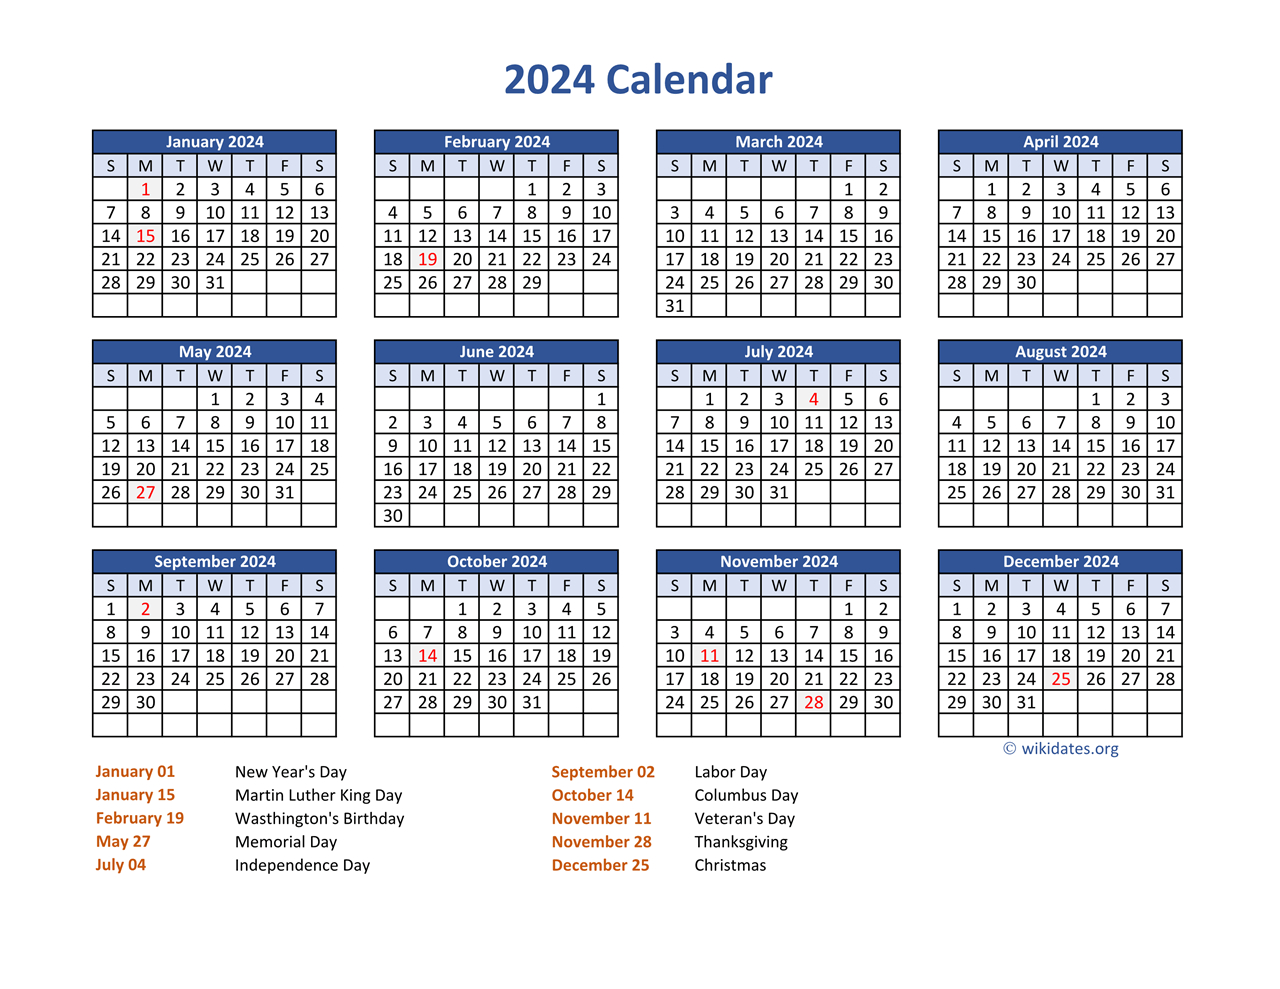 Pdf Calendar 2024 With Federal Holidays | Wikidates | Printable Calendar 2024 Wiki Calendar